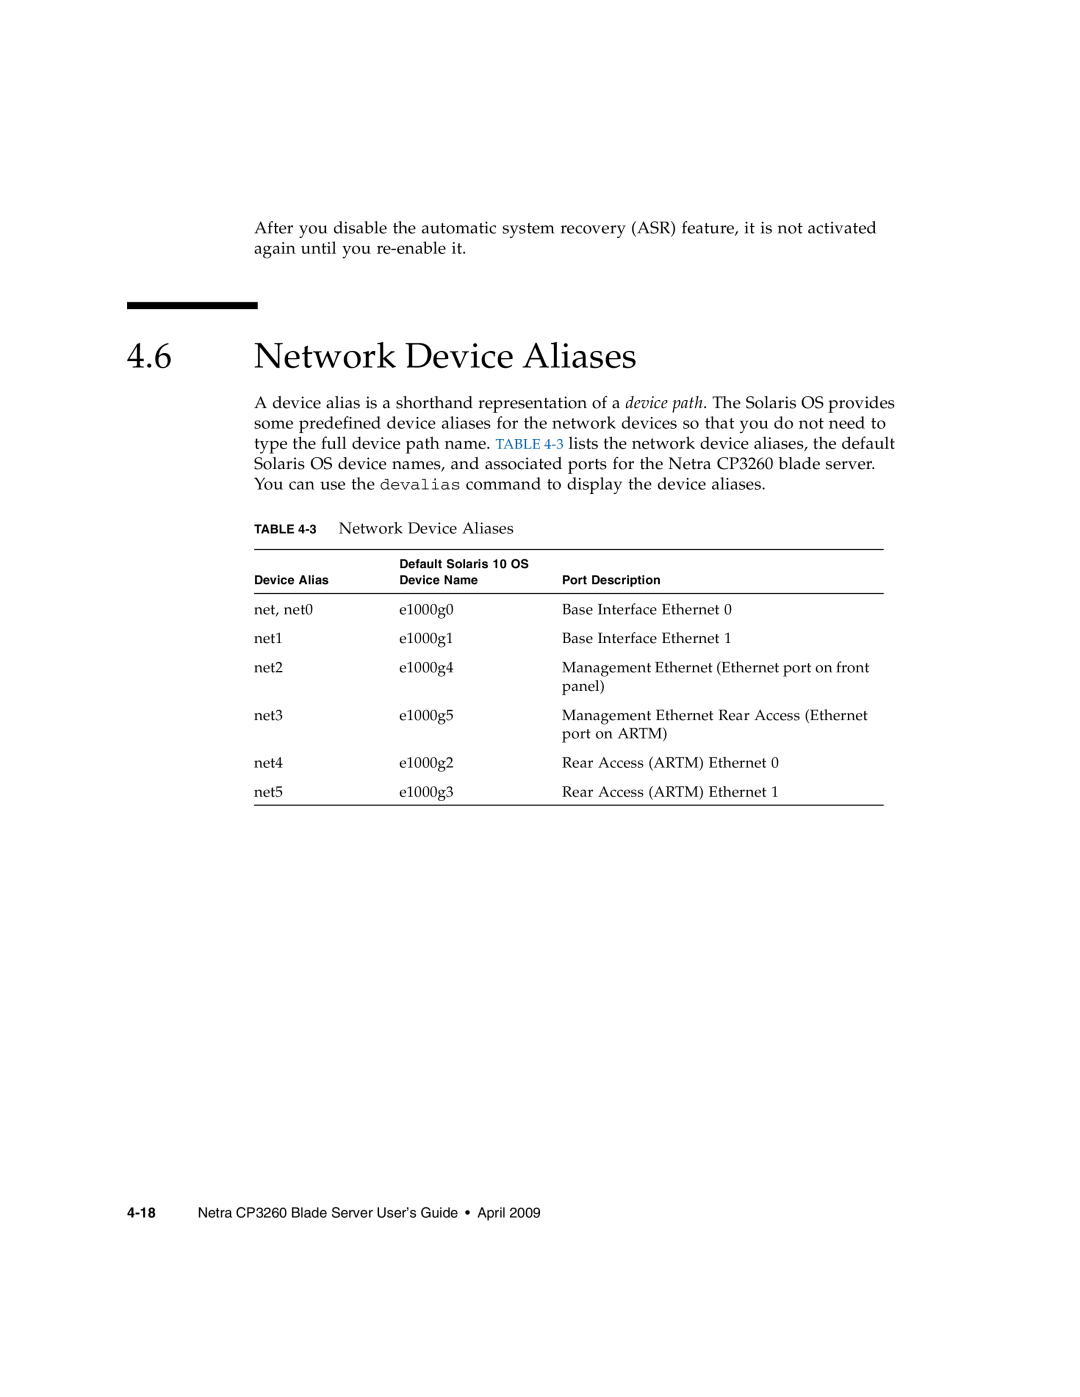 Sun Microsystems CP3260 manual 3 Network Device Aliases 